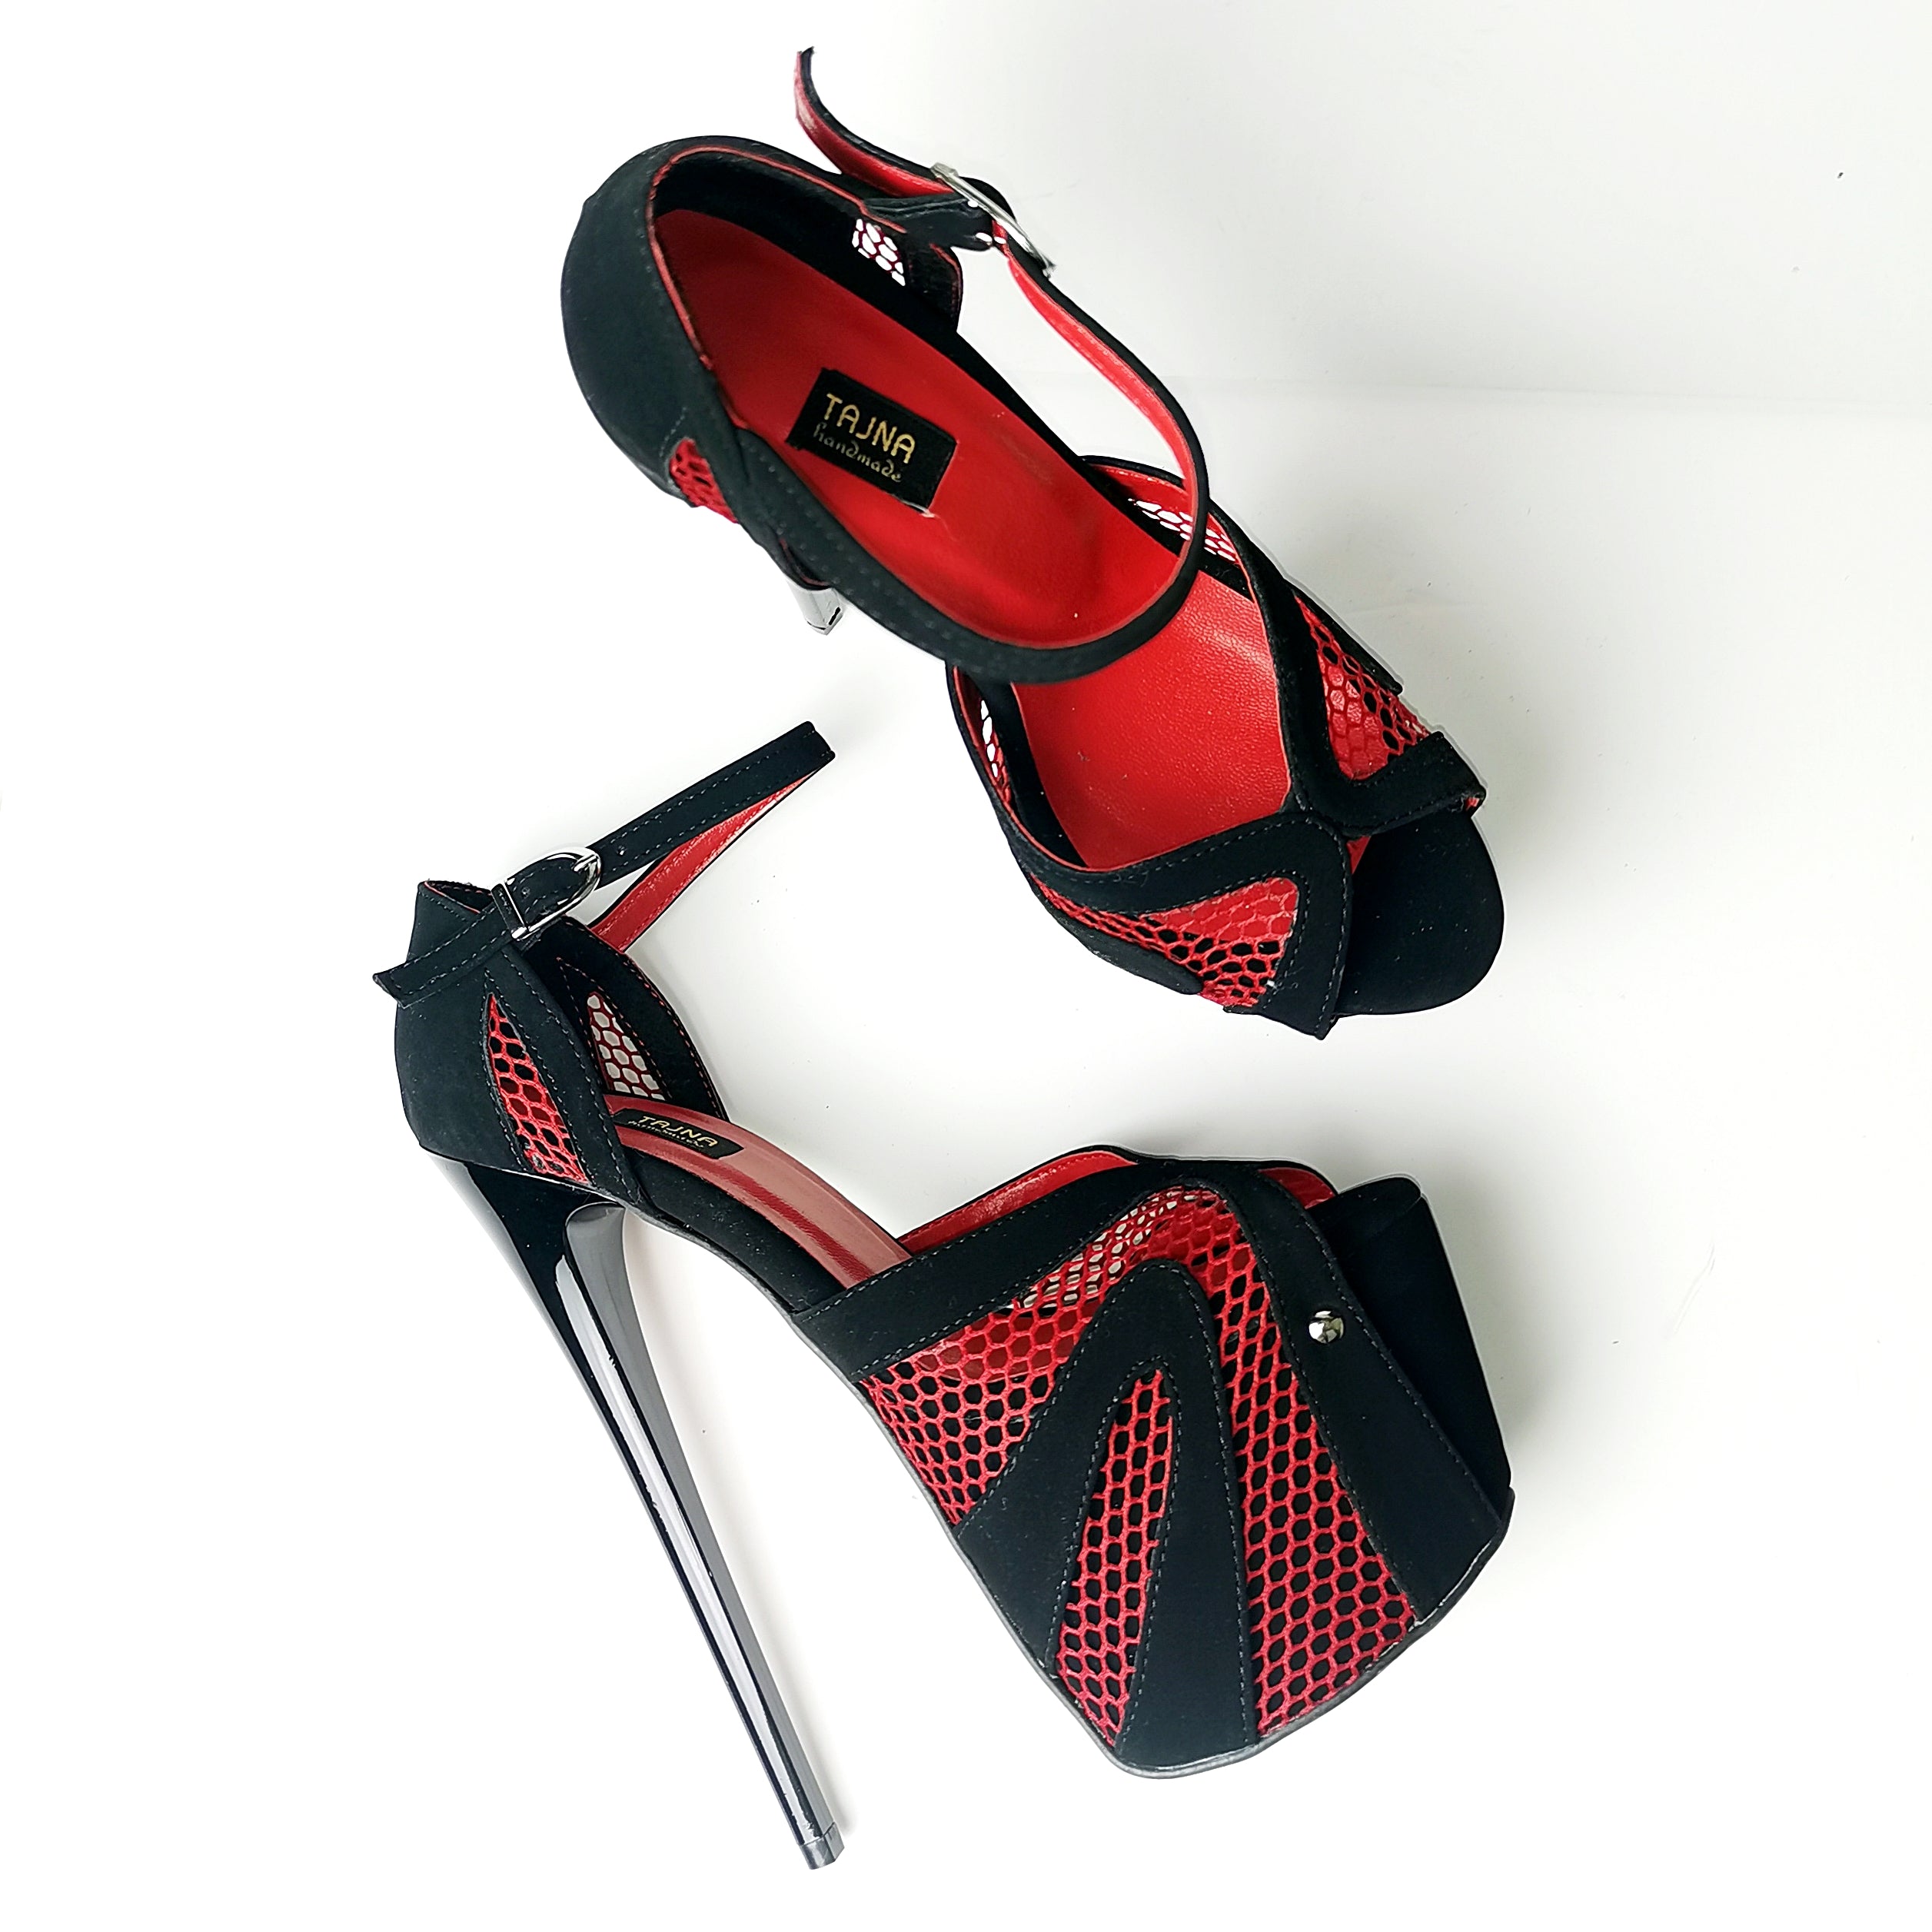 Black Red Fishnet Detail High Heels - Tajna Club